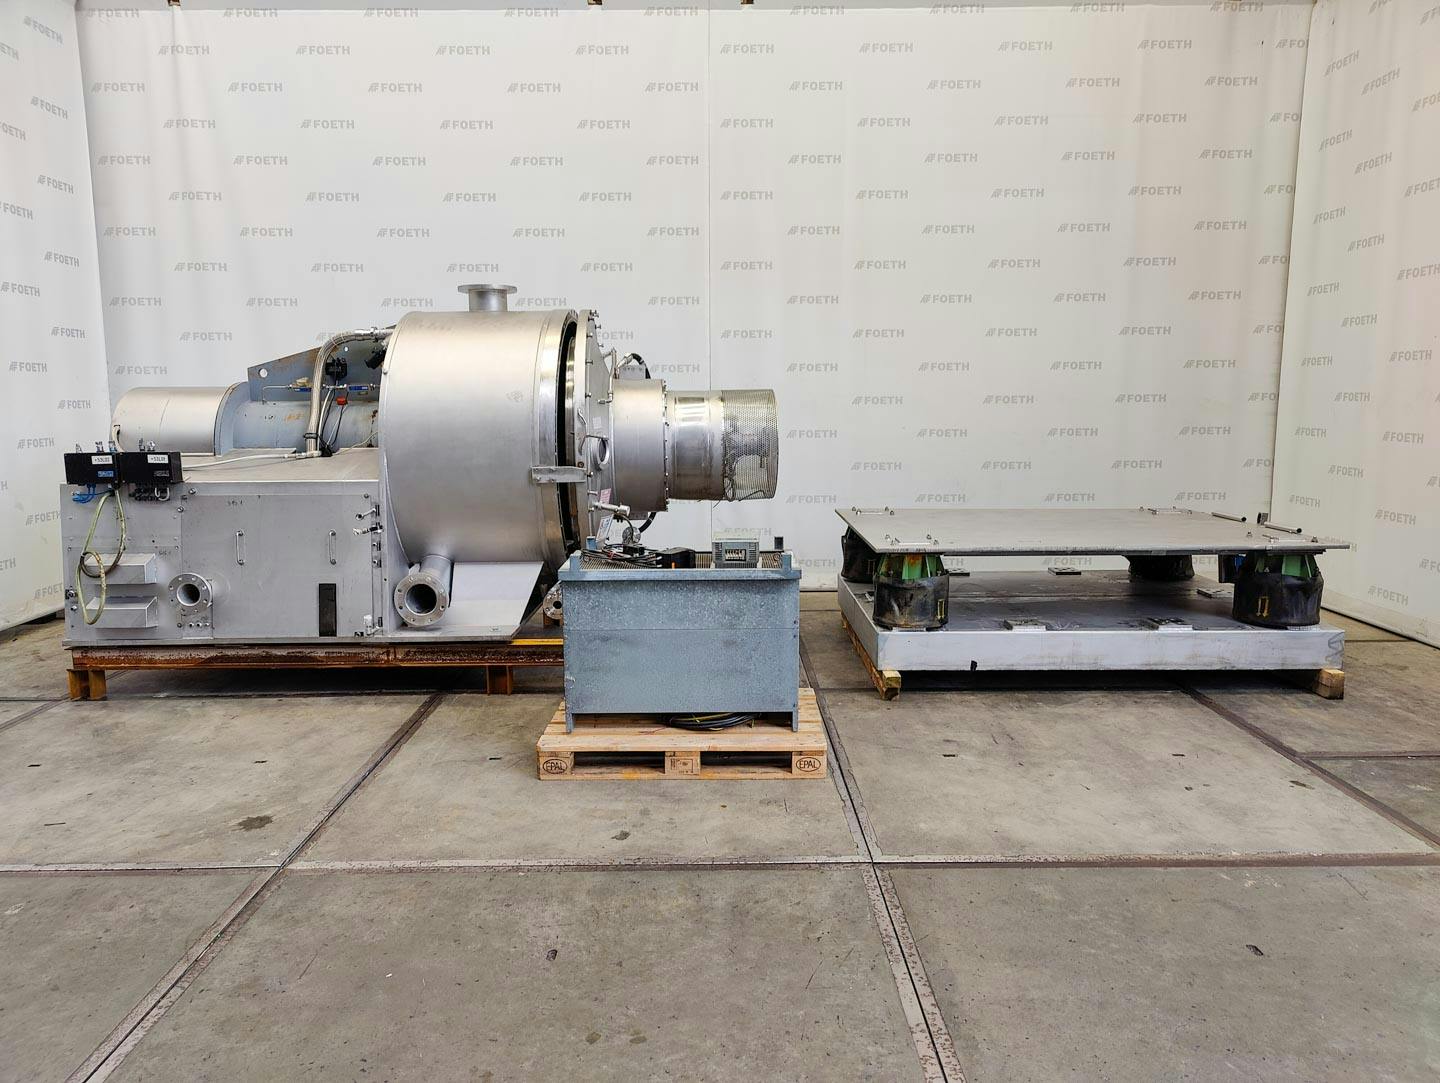 Fima Process Trockner TZT-1300 - centrifuge dryer - Trommelzentrifuge - image 9